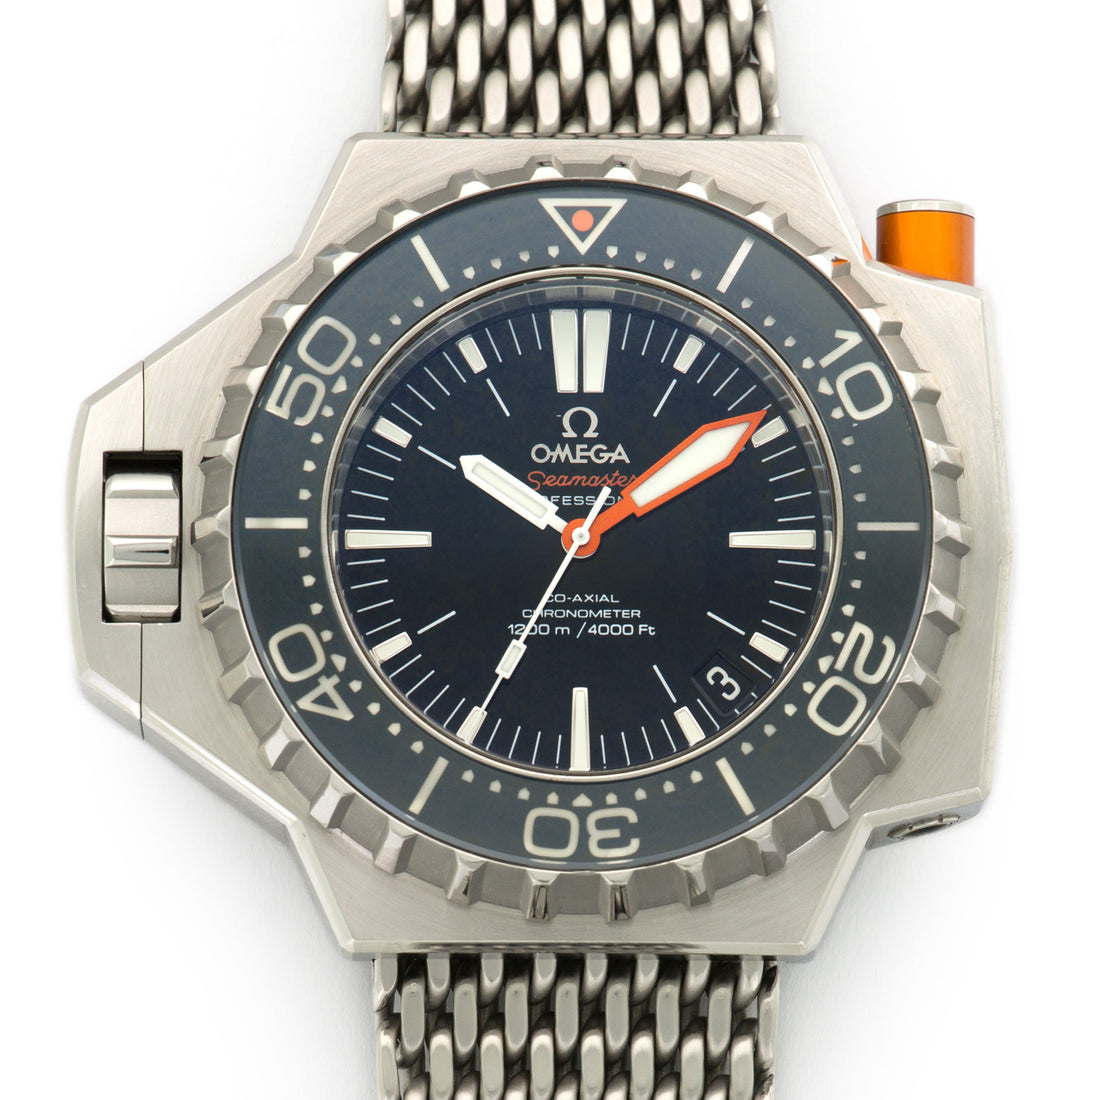 Omega Seamaster Ploprof Watch Ref. 224.30.55.21.0